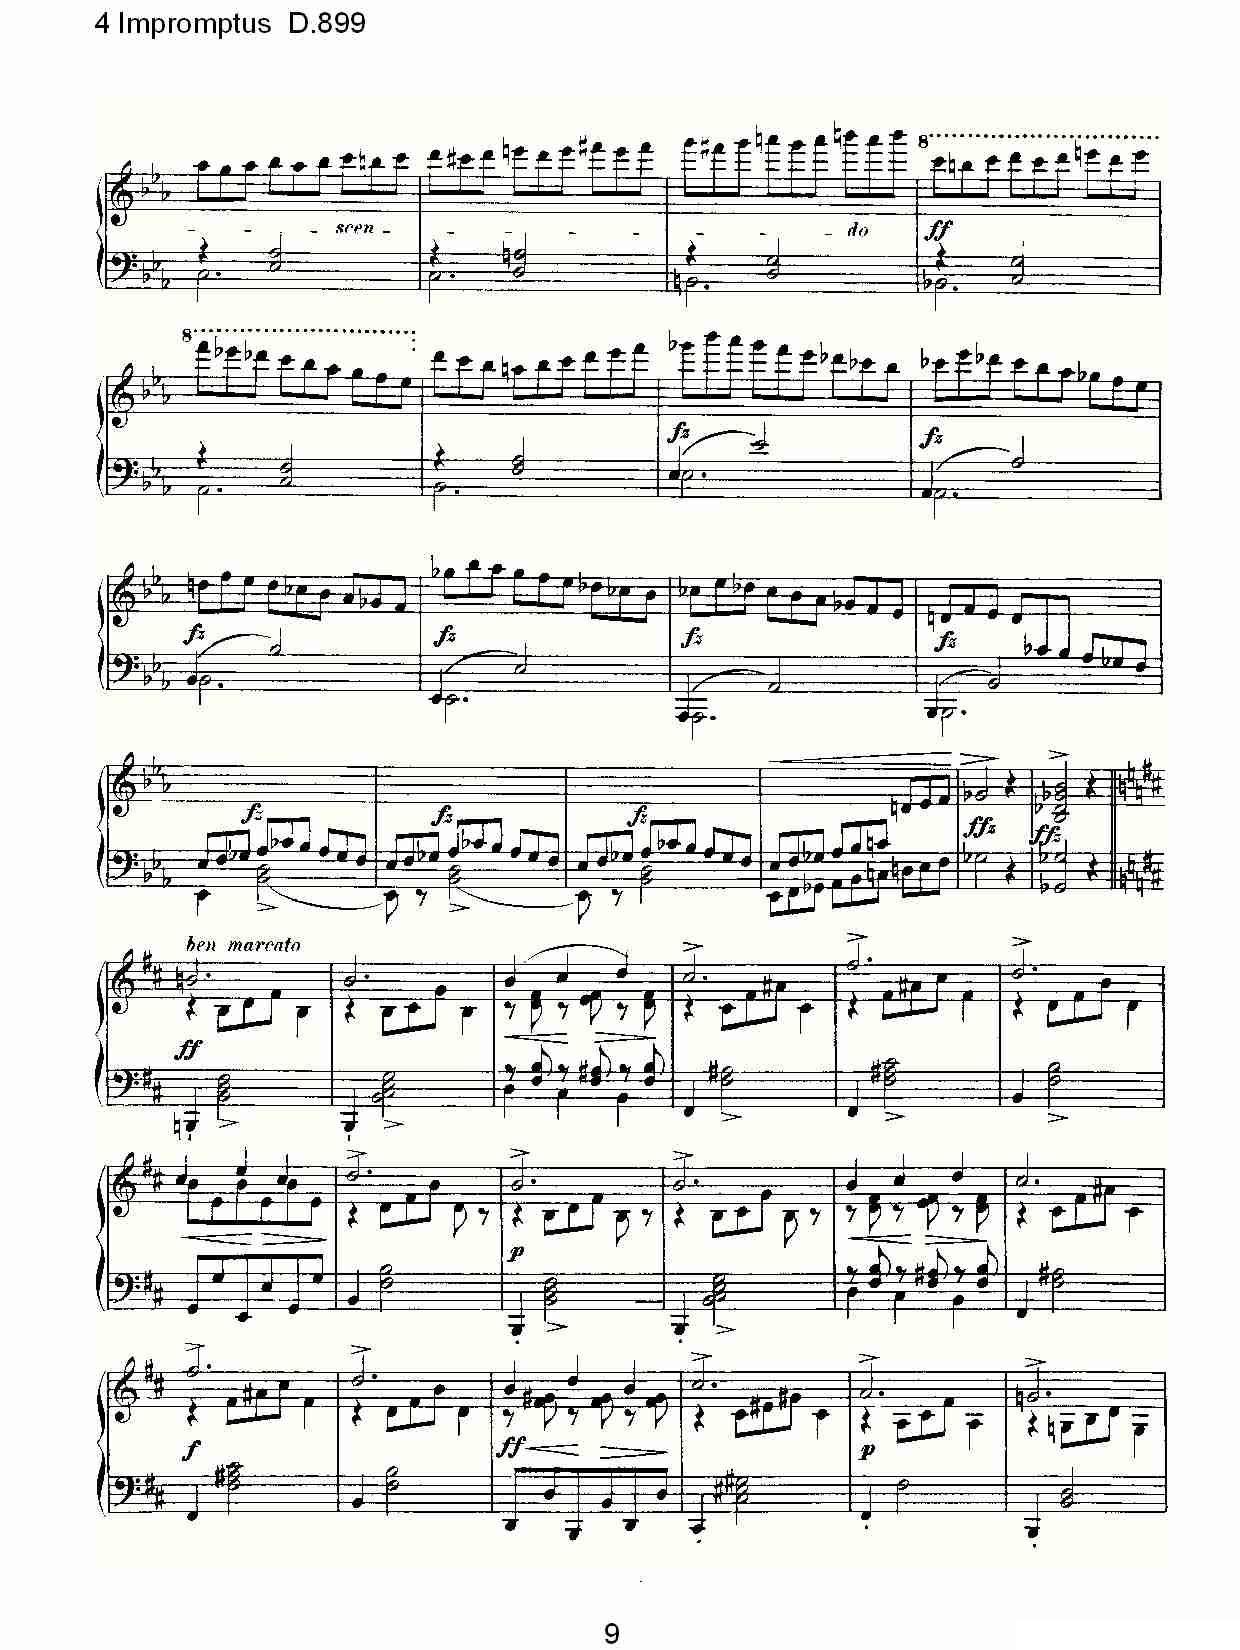 4 Impromptus D.899（4人即兴演奏 D.899）钢琴曲谱（图9）